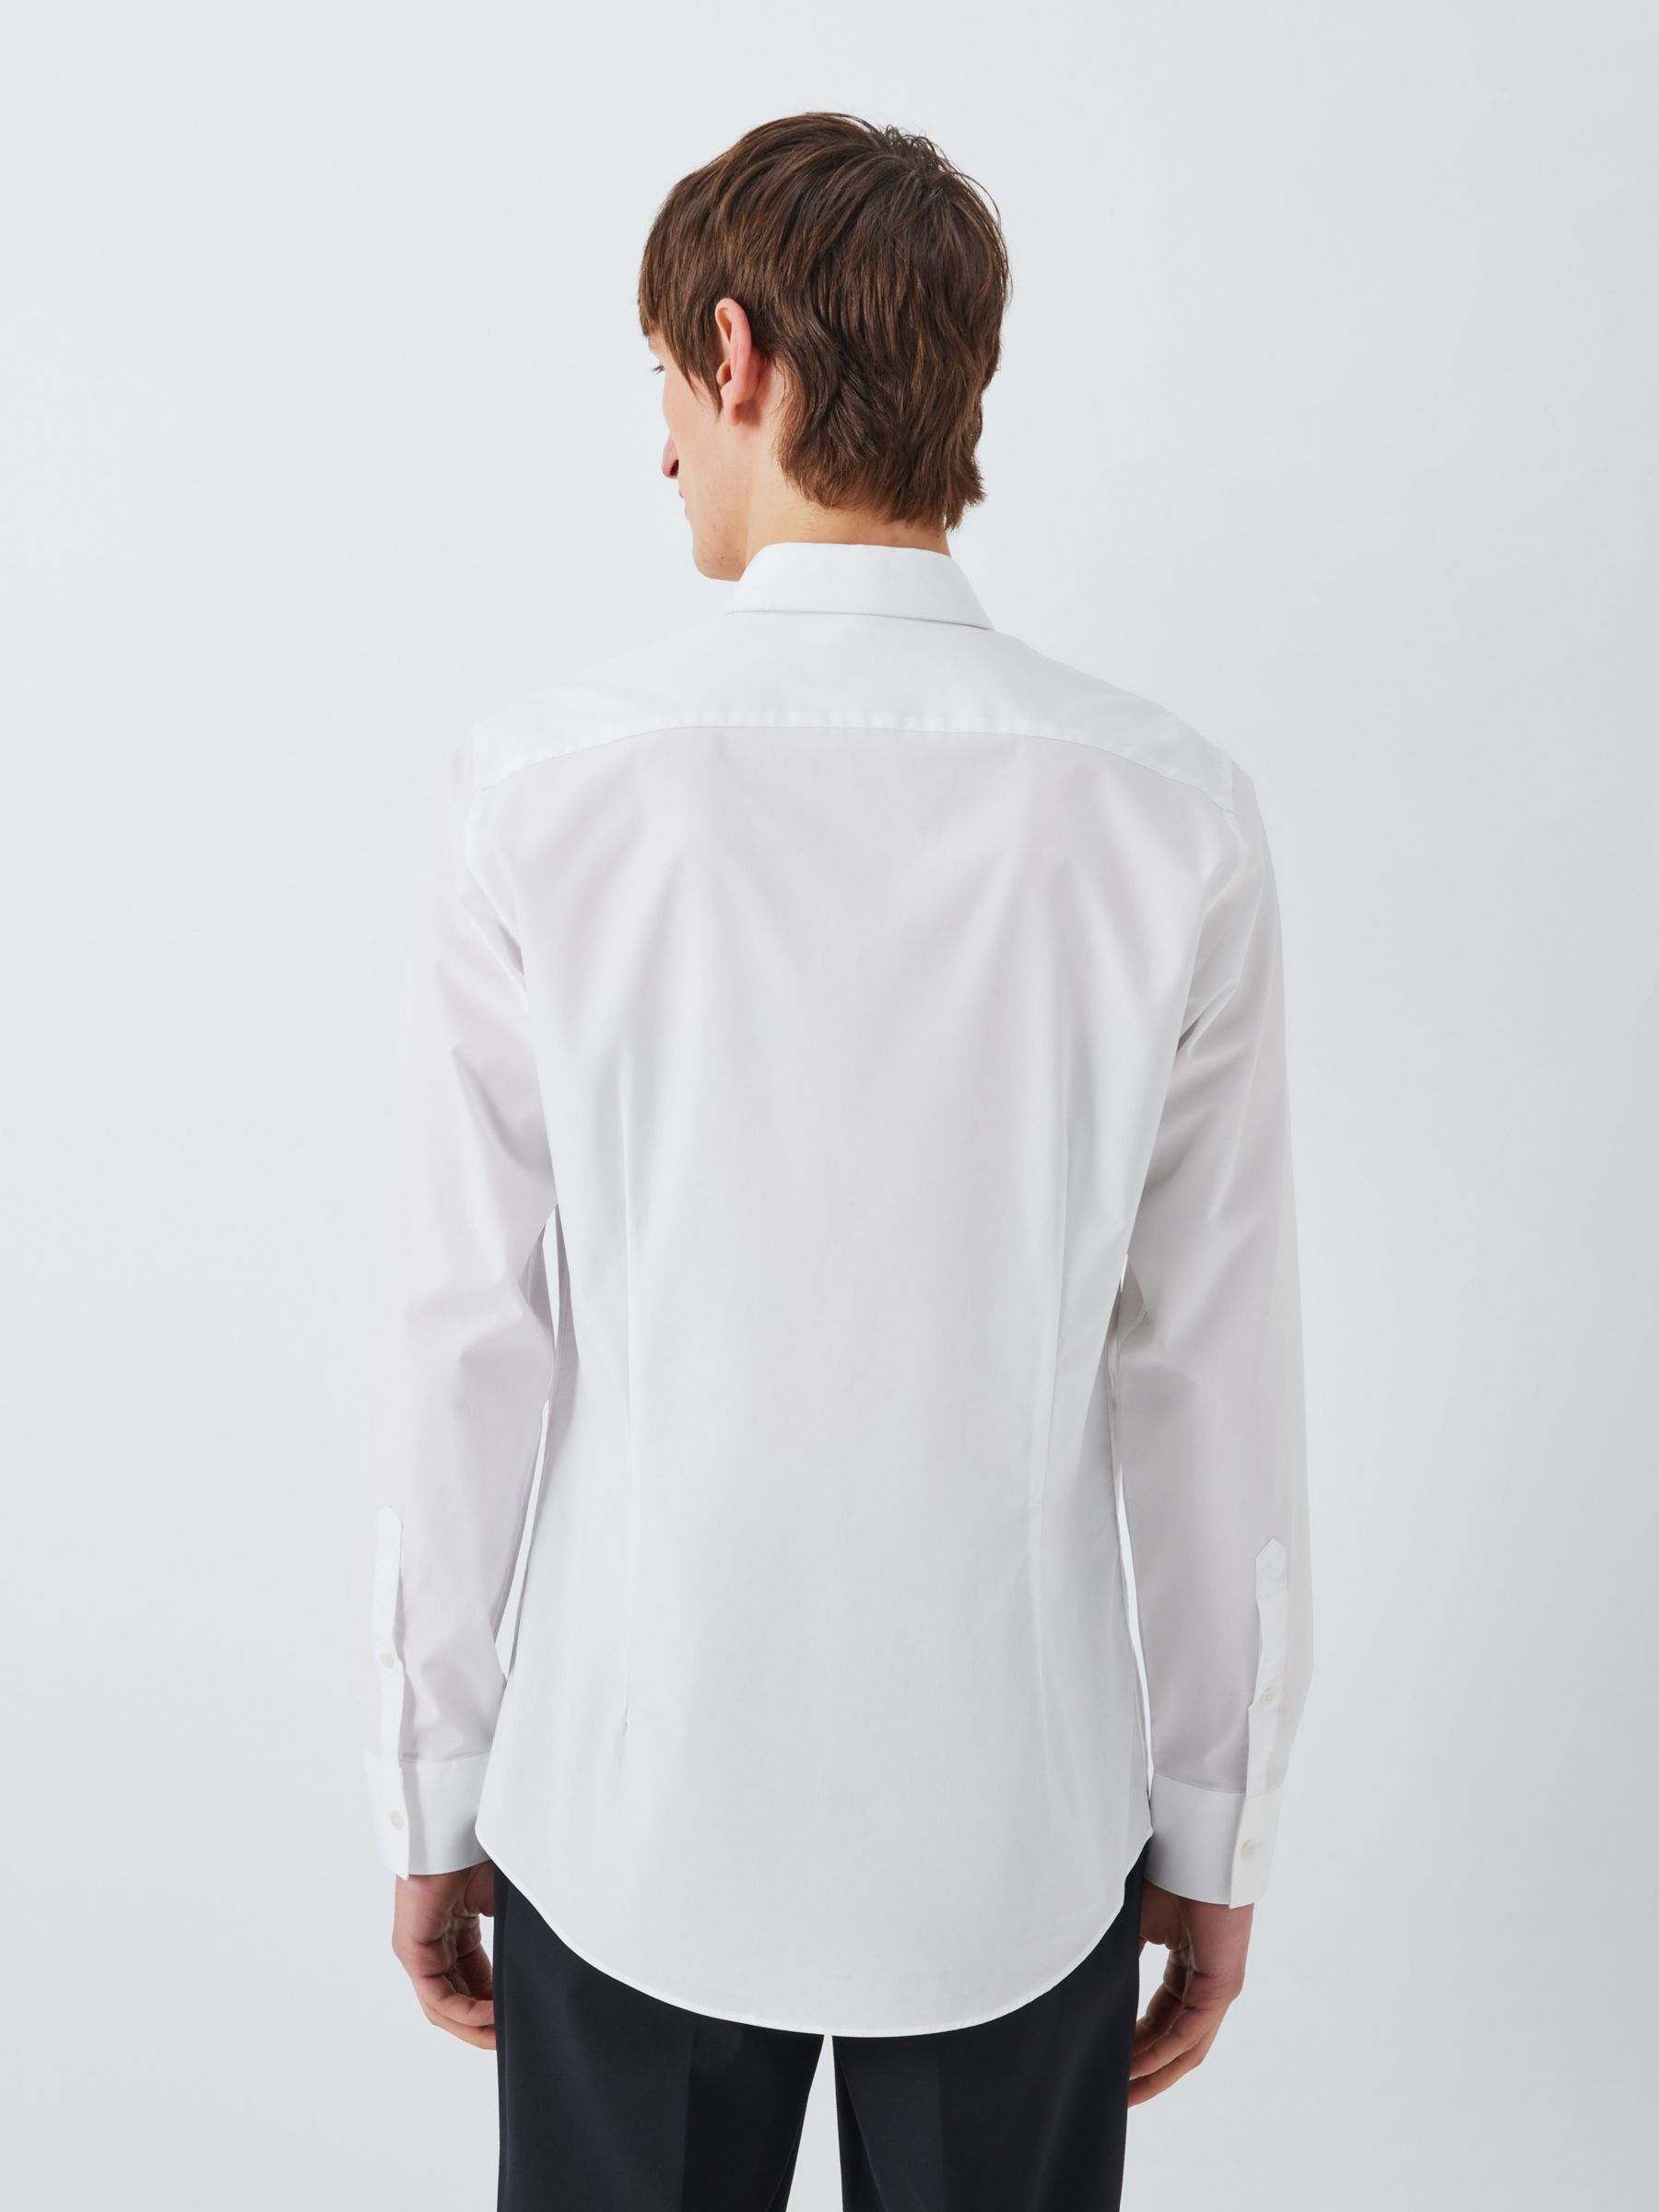 Kin Stretch Poplin Slim Fit Shirt, White, 14.5R